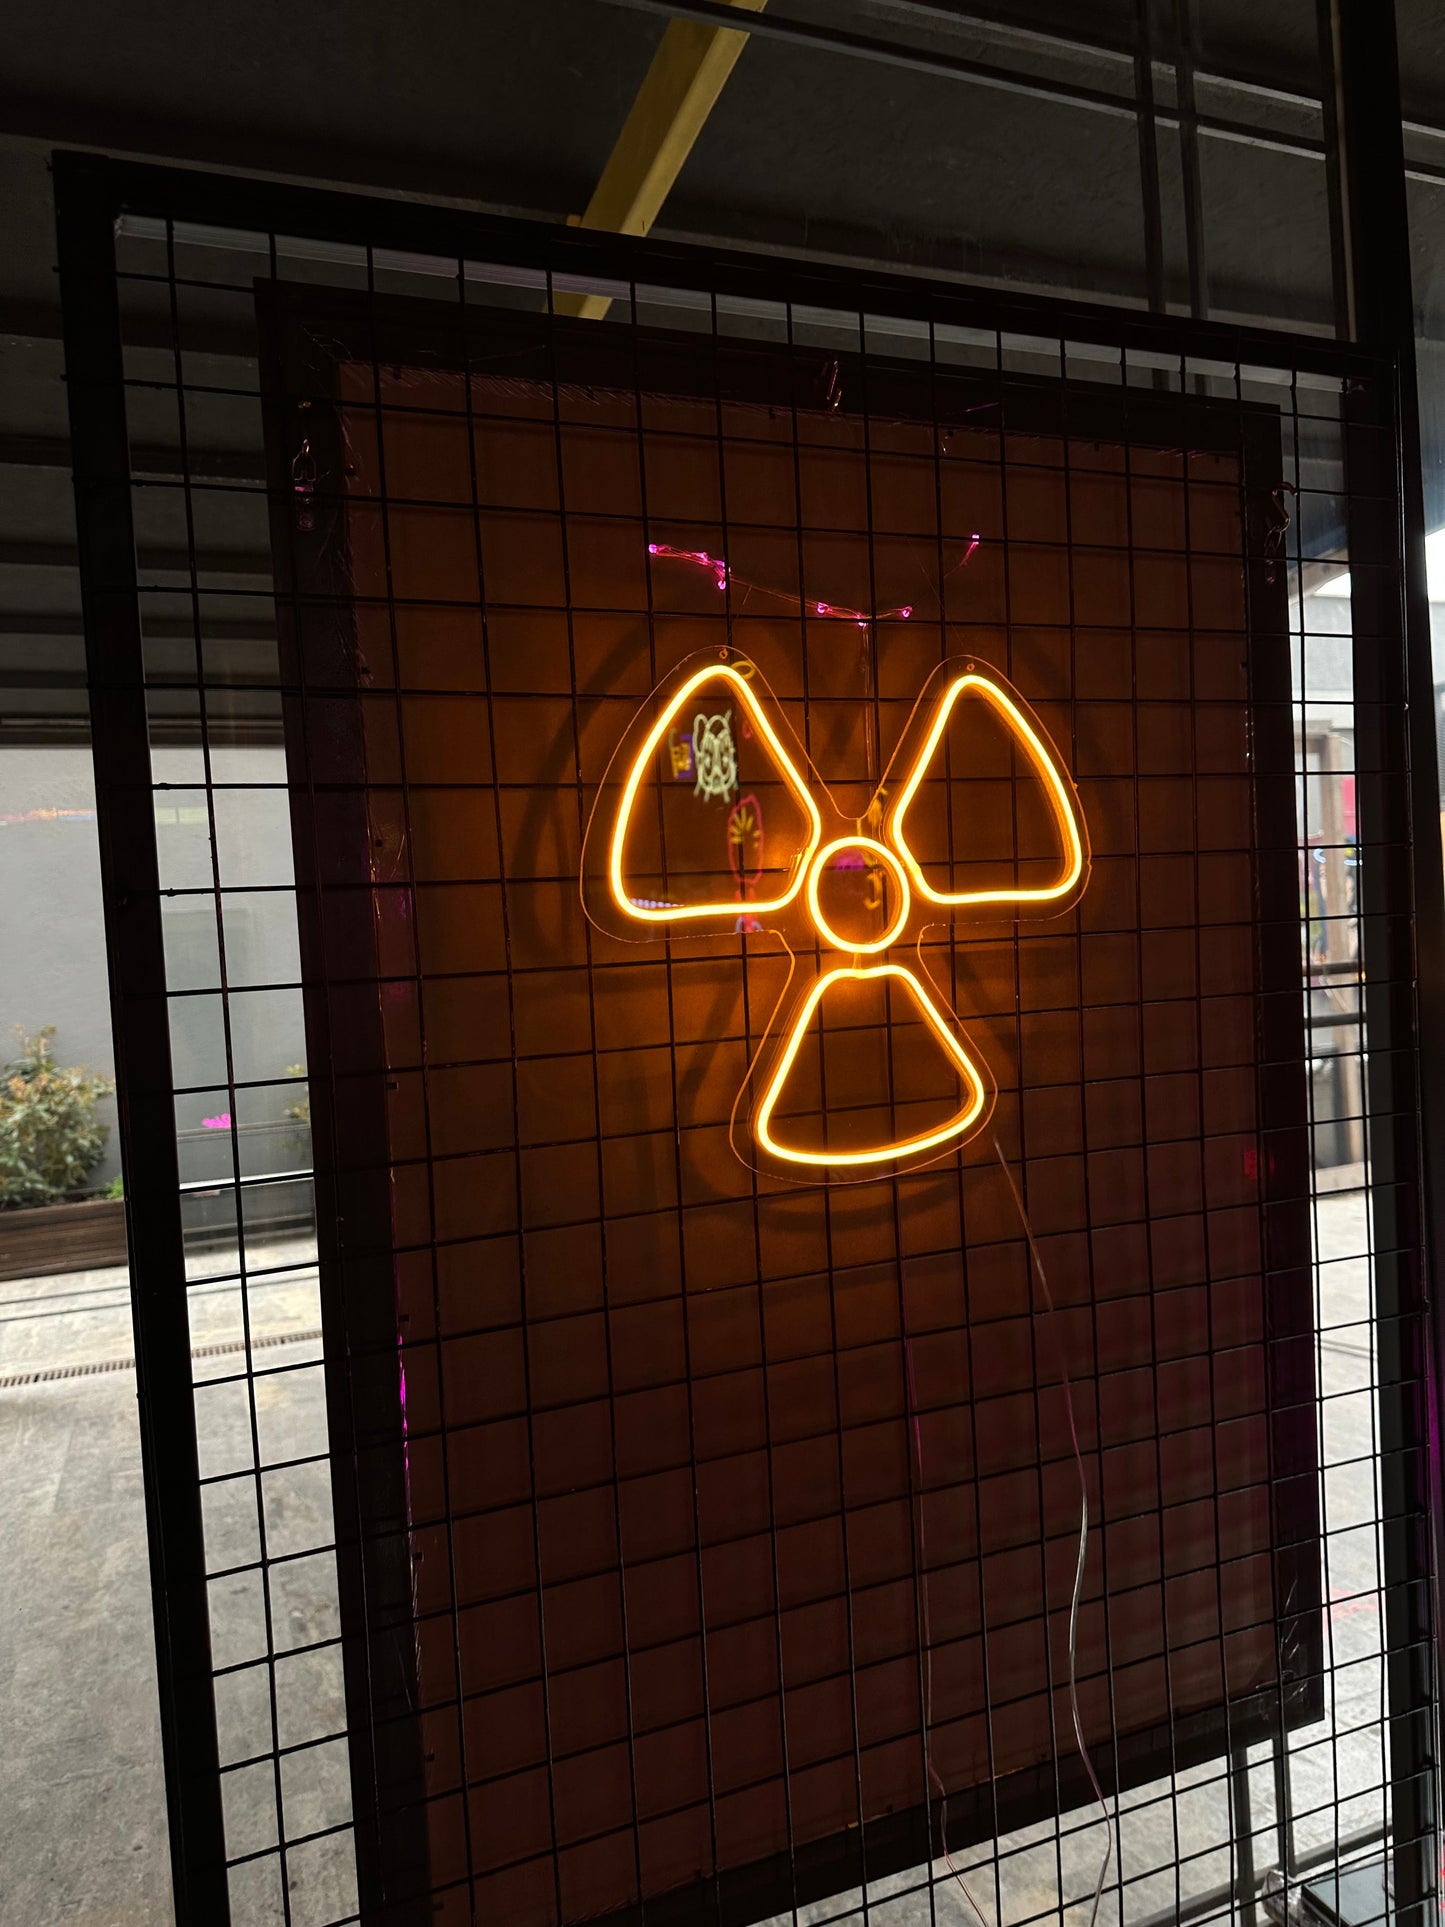 Nuclear Symbol Neon Light